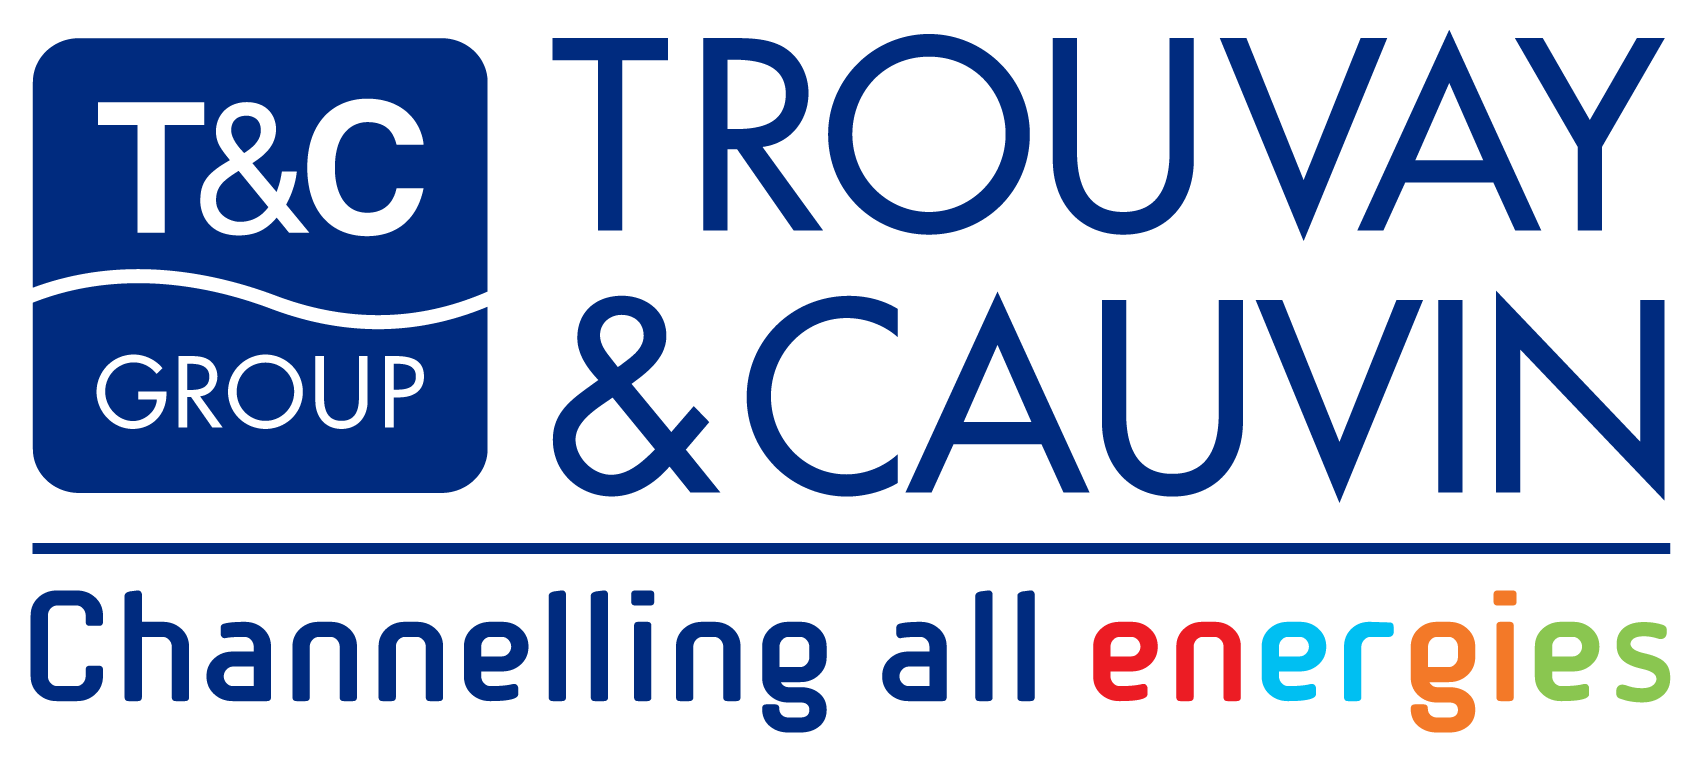 Trouvay & Cauvin logo